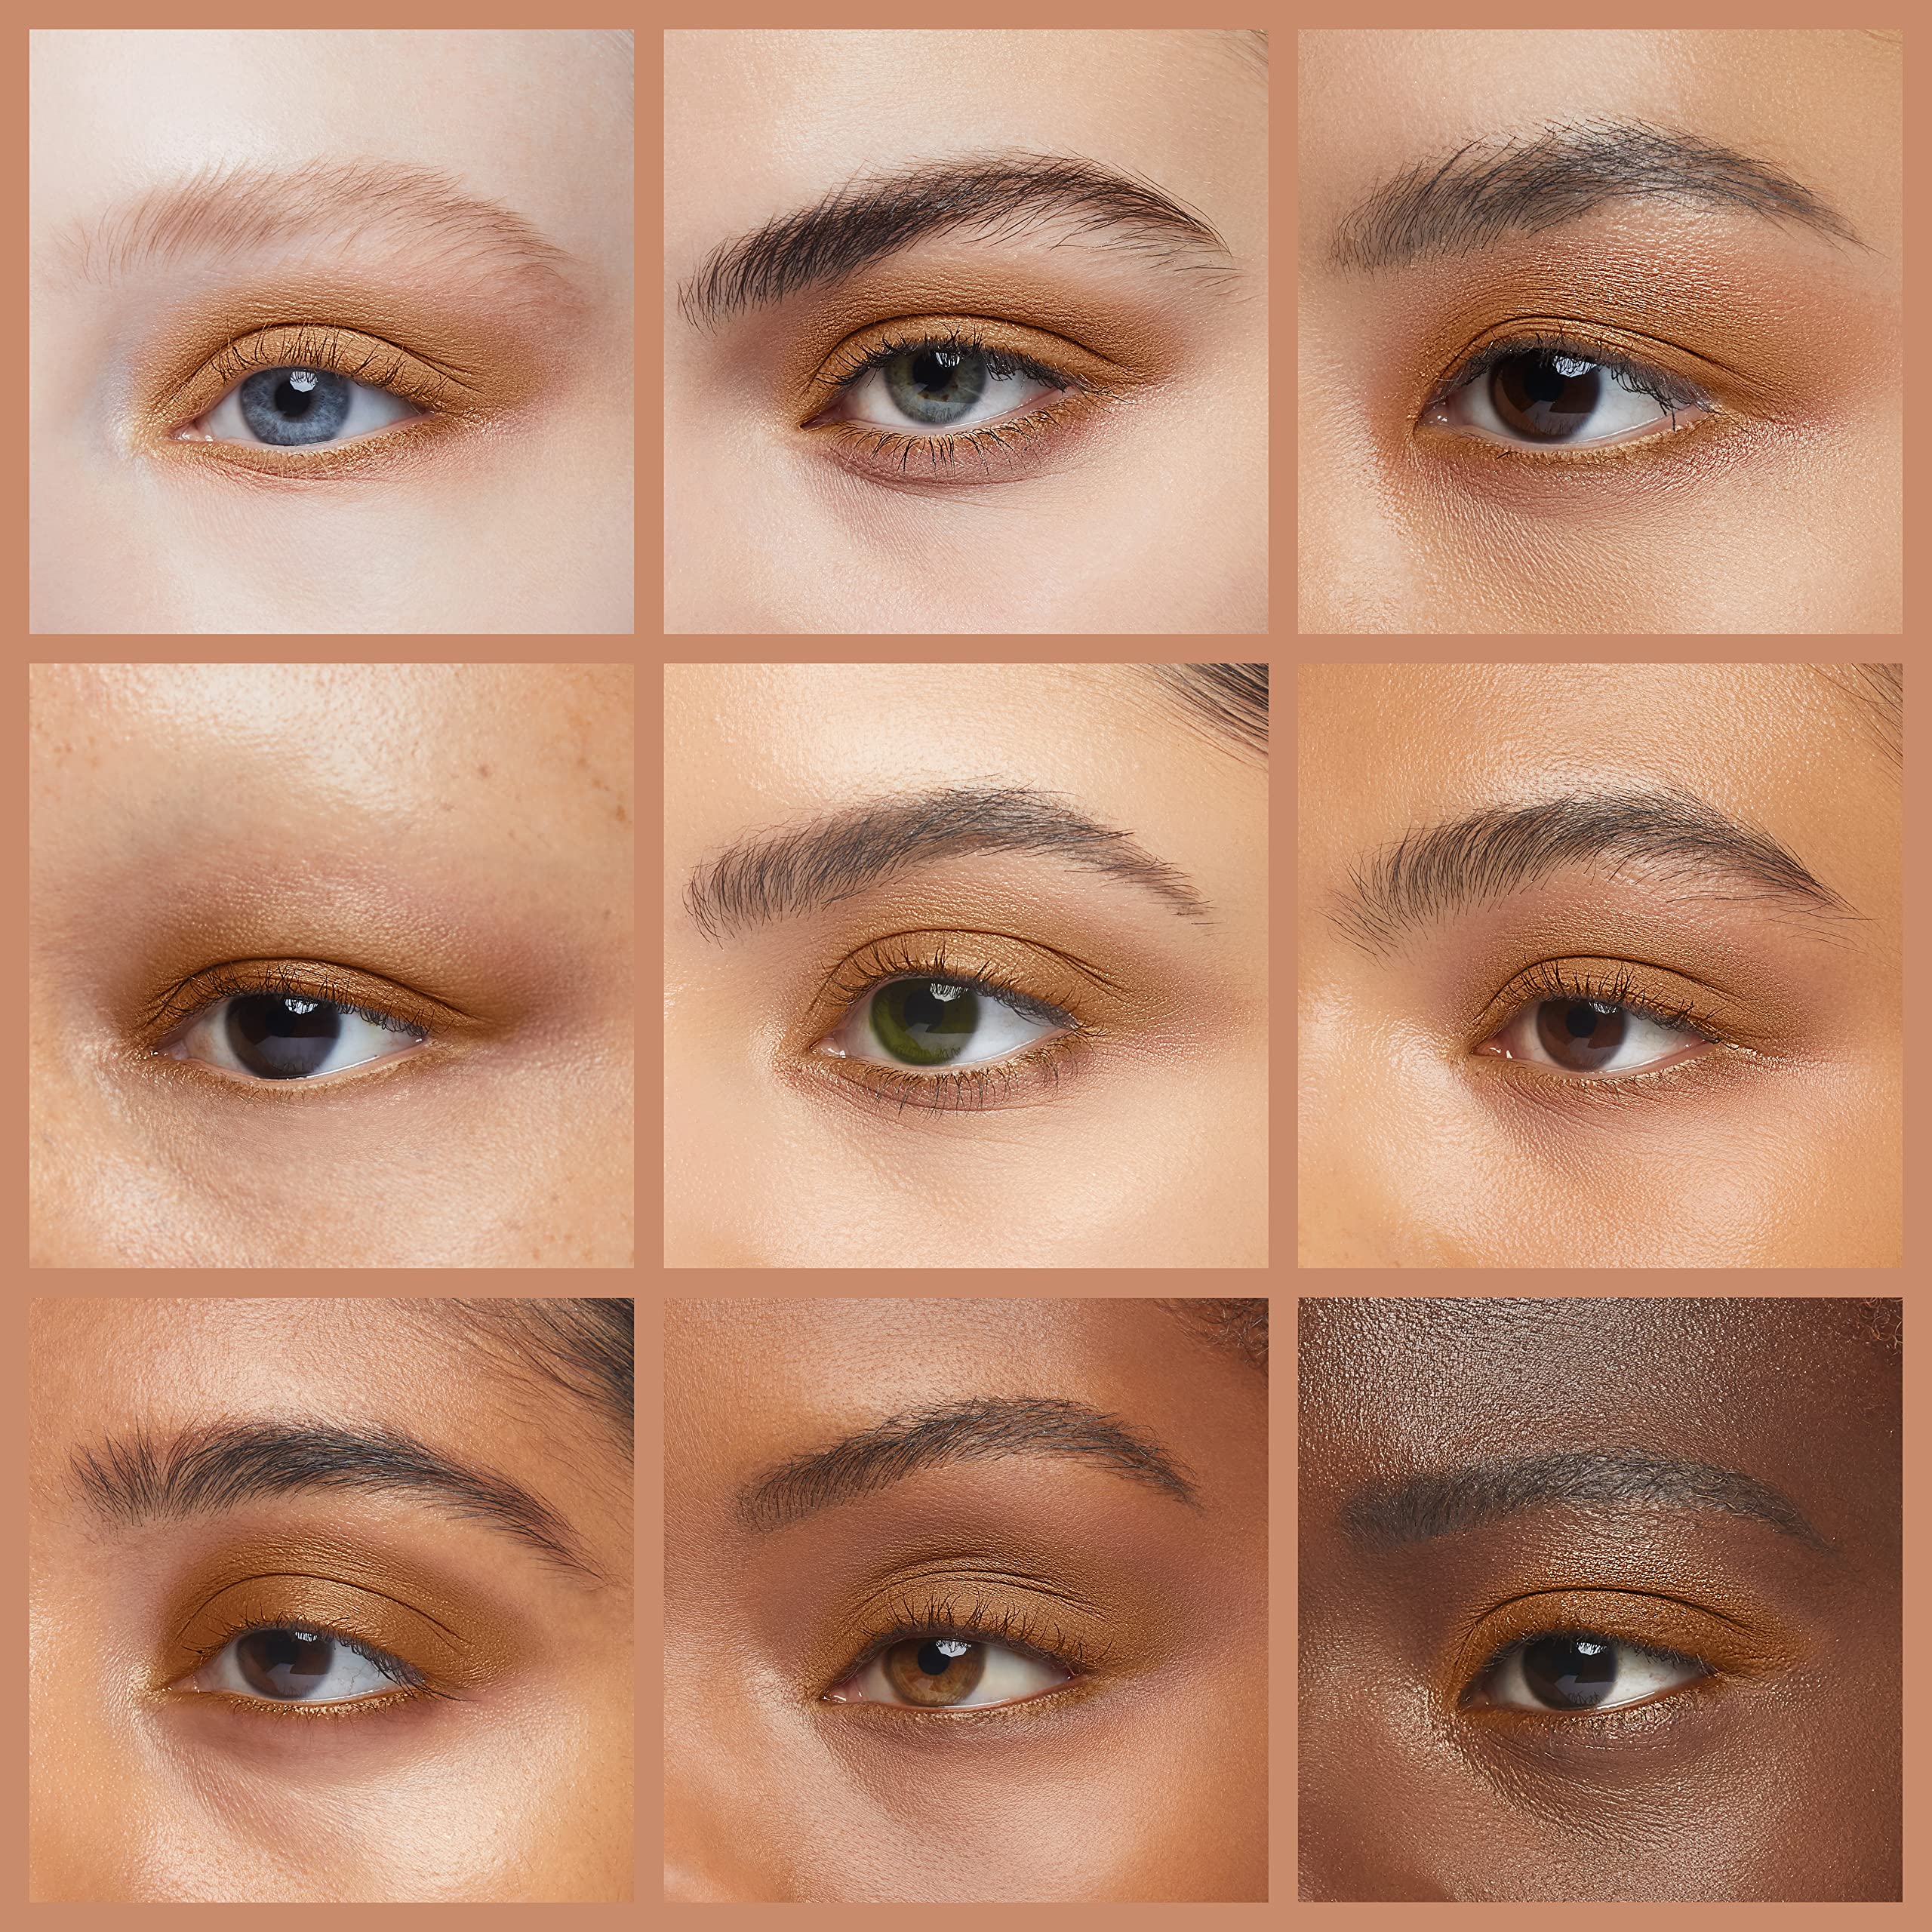 NYX PROFESSIONAL MAKEUP Eyeshadow Base Primer, Skin Tone